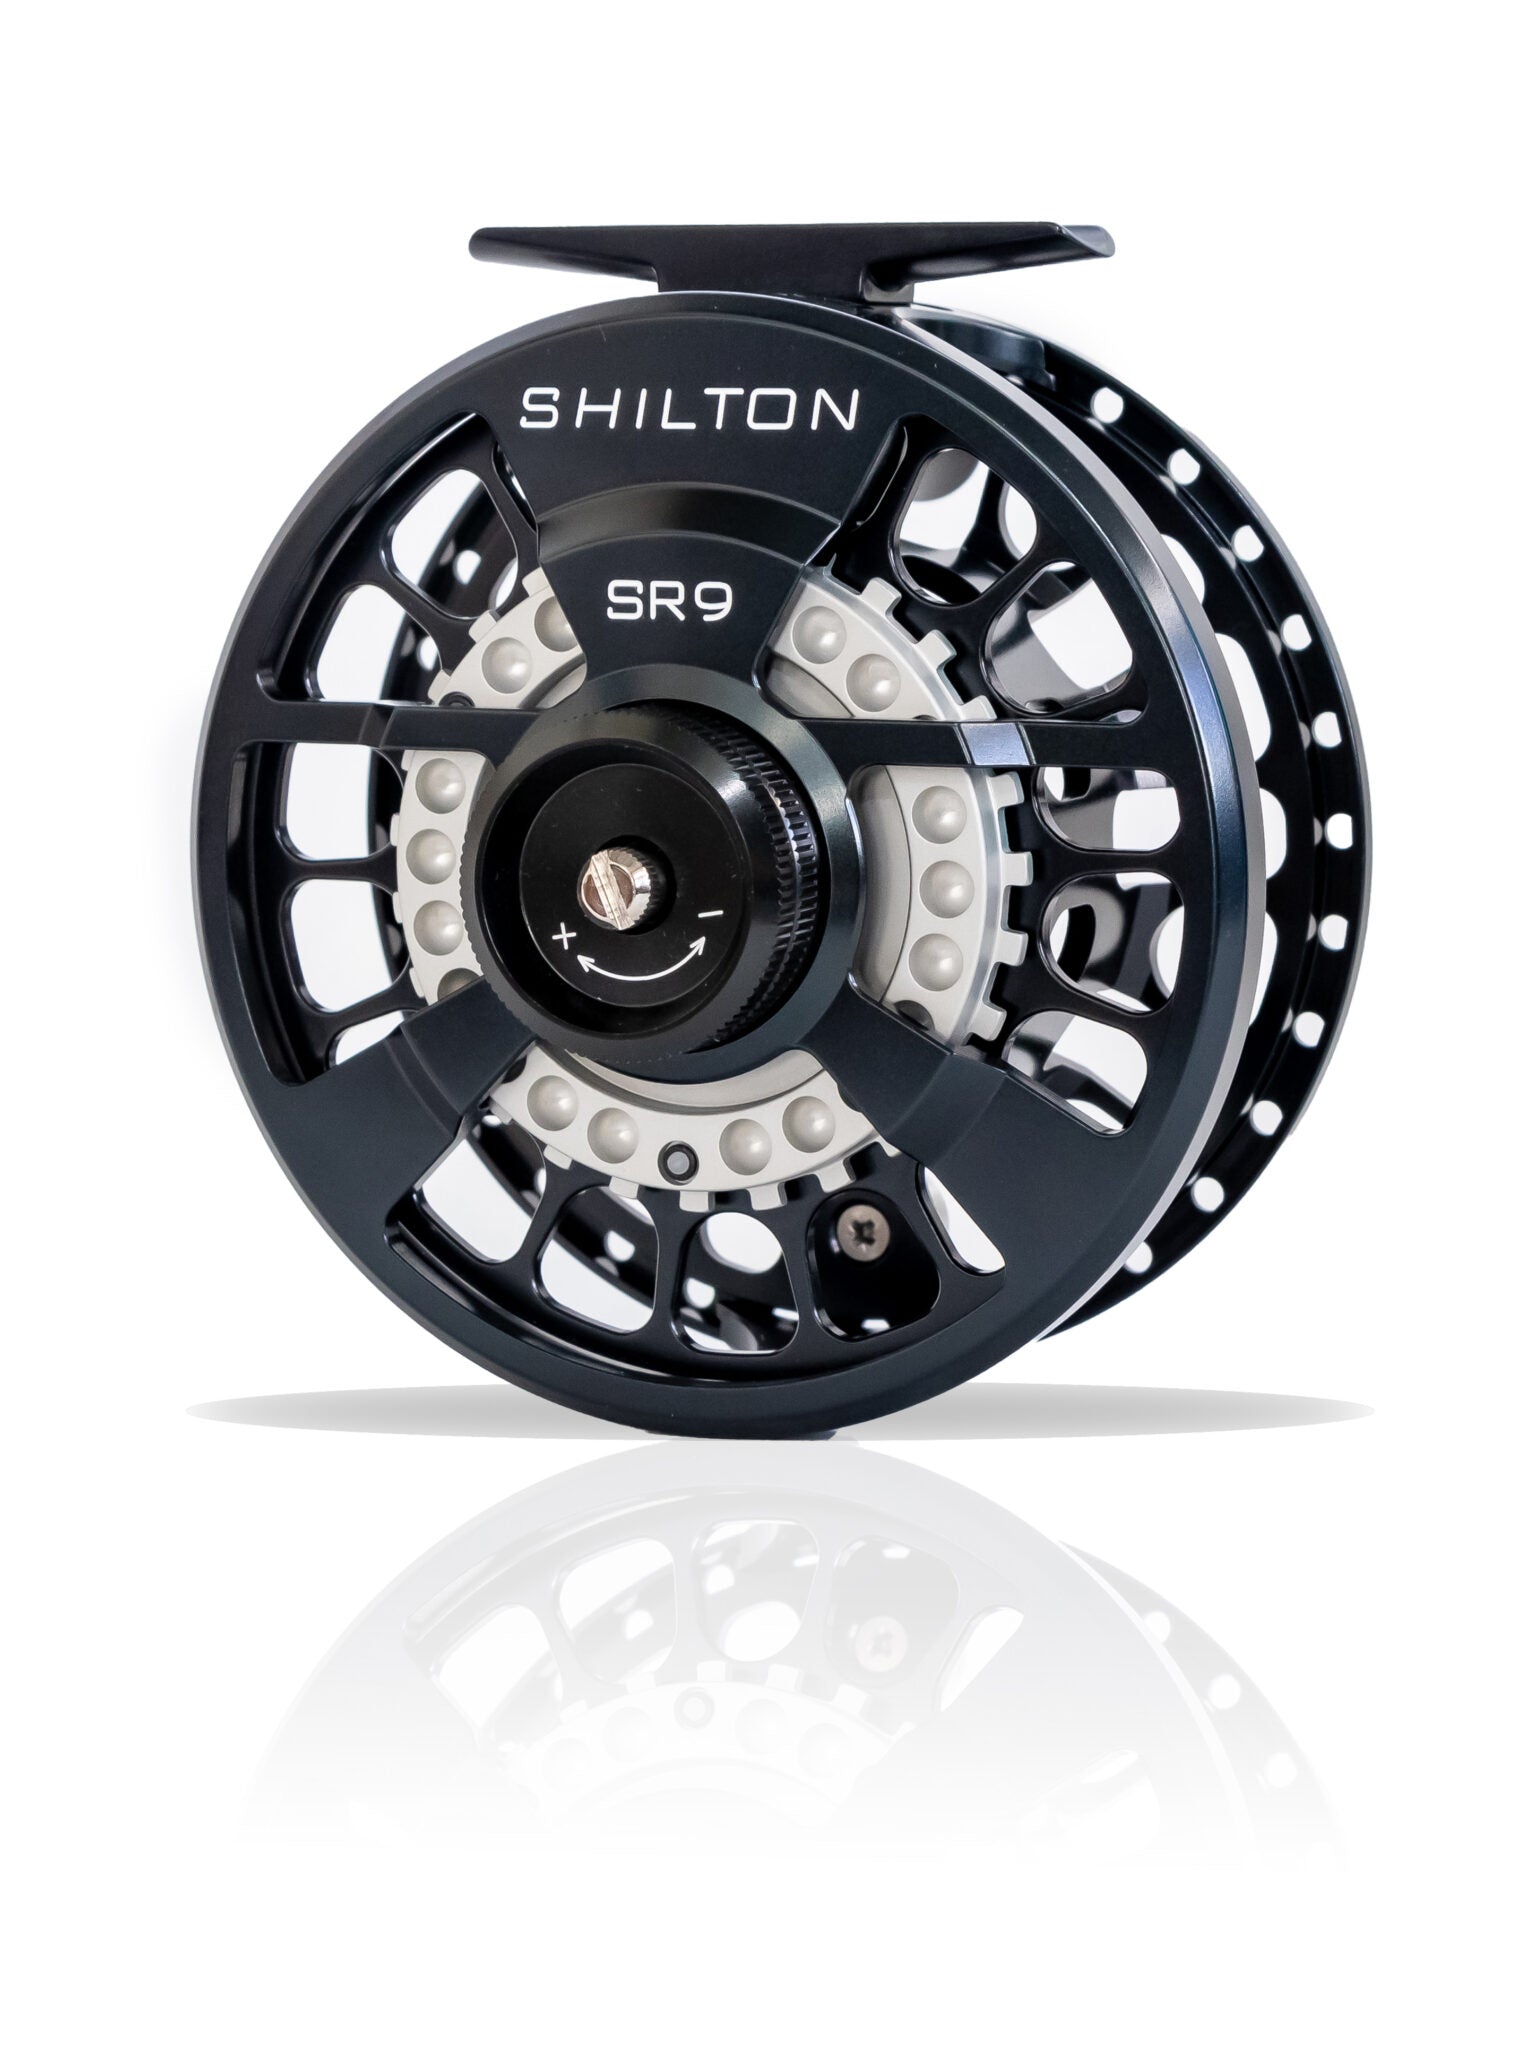 Shilton SR9 Reels (8-9wt) in Black